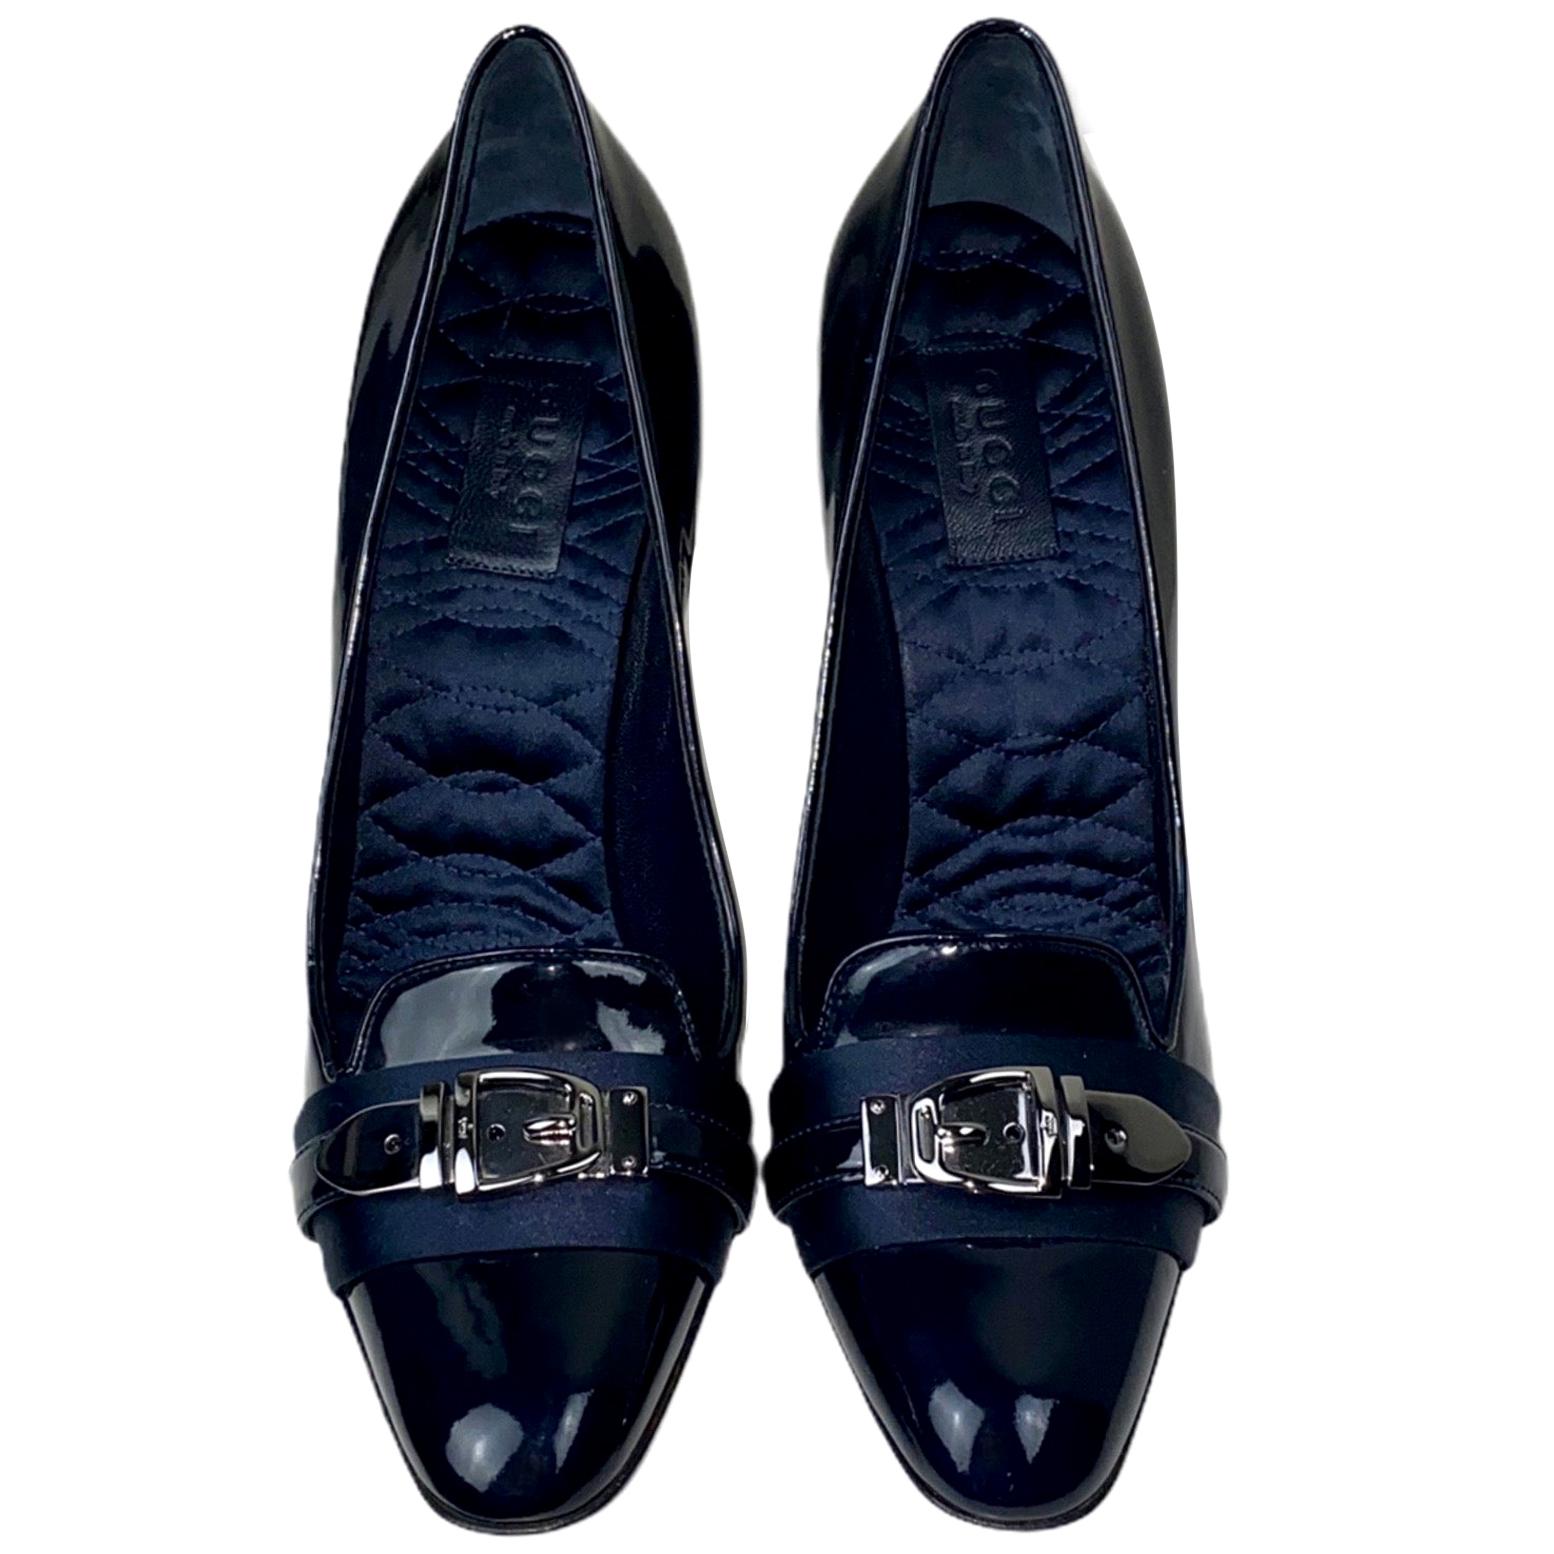 UNWORN Gucci Midnight Blue Tuxedo Satin Patent Leather High Heels Pumps 